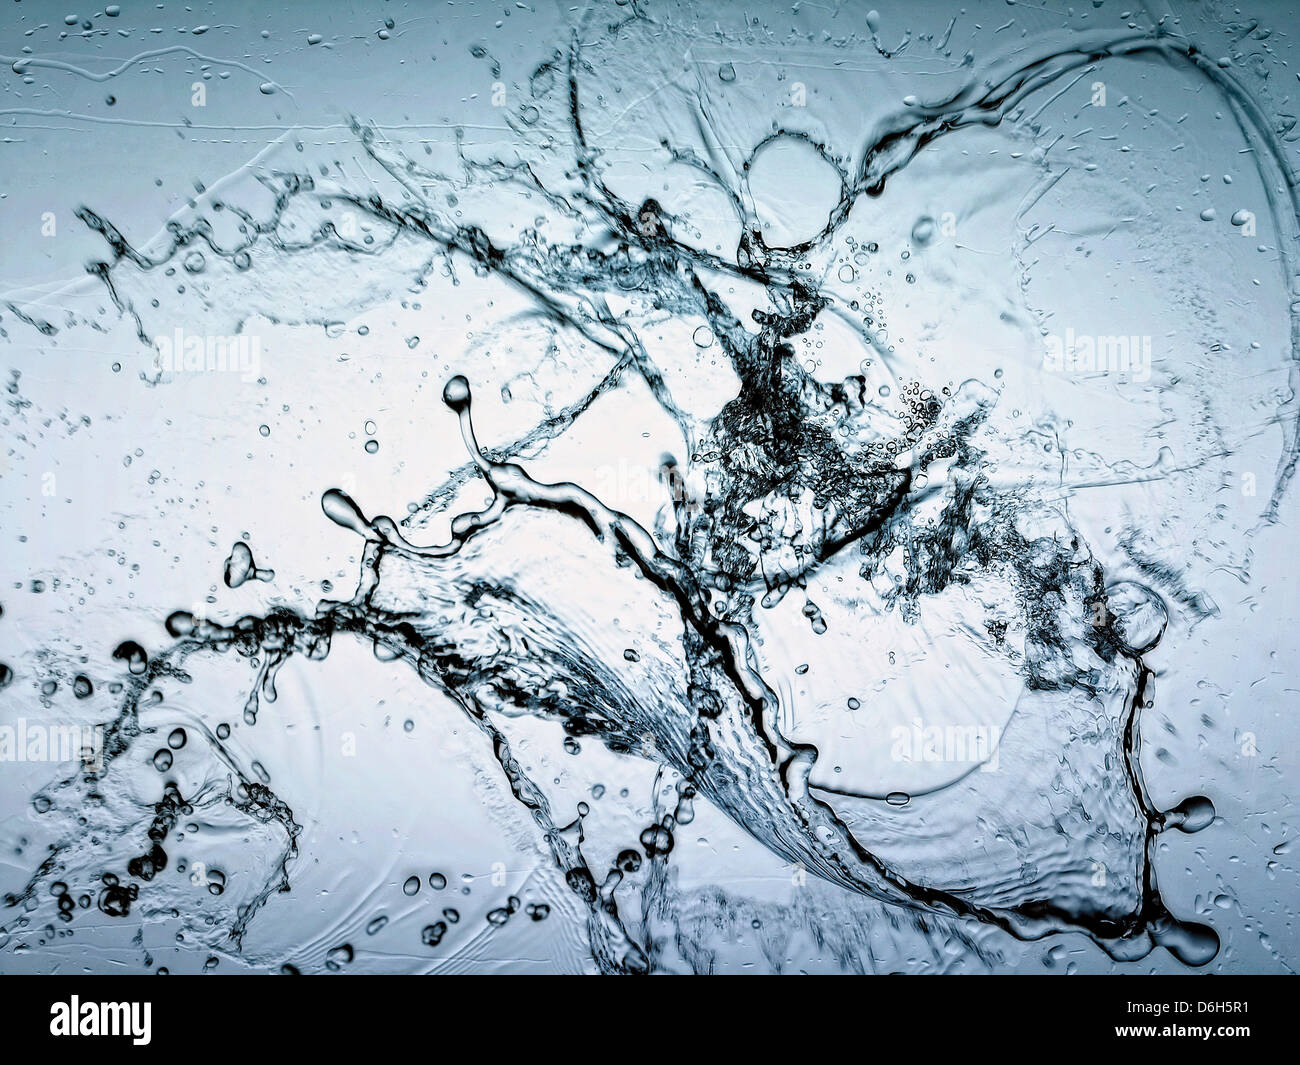 Water splashing in air Stock Photo